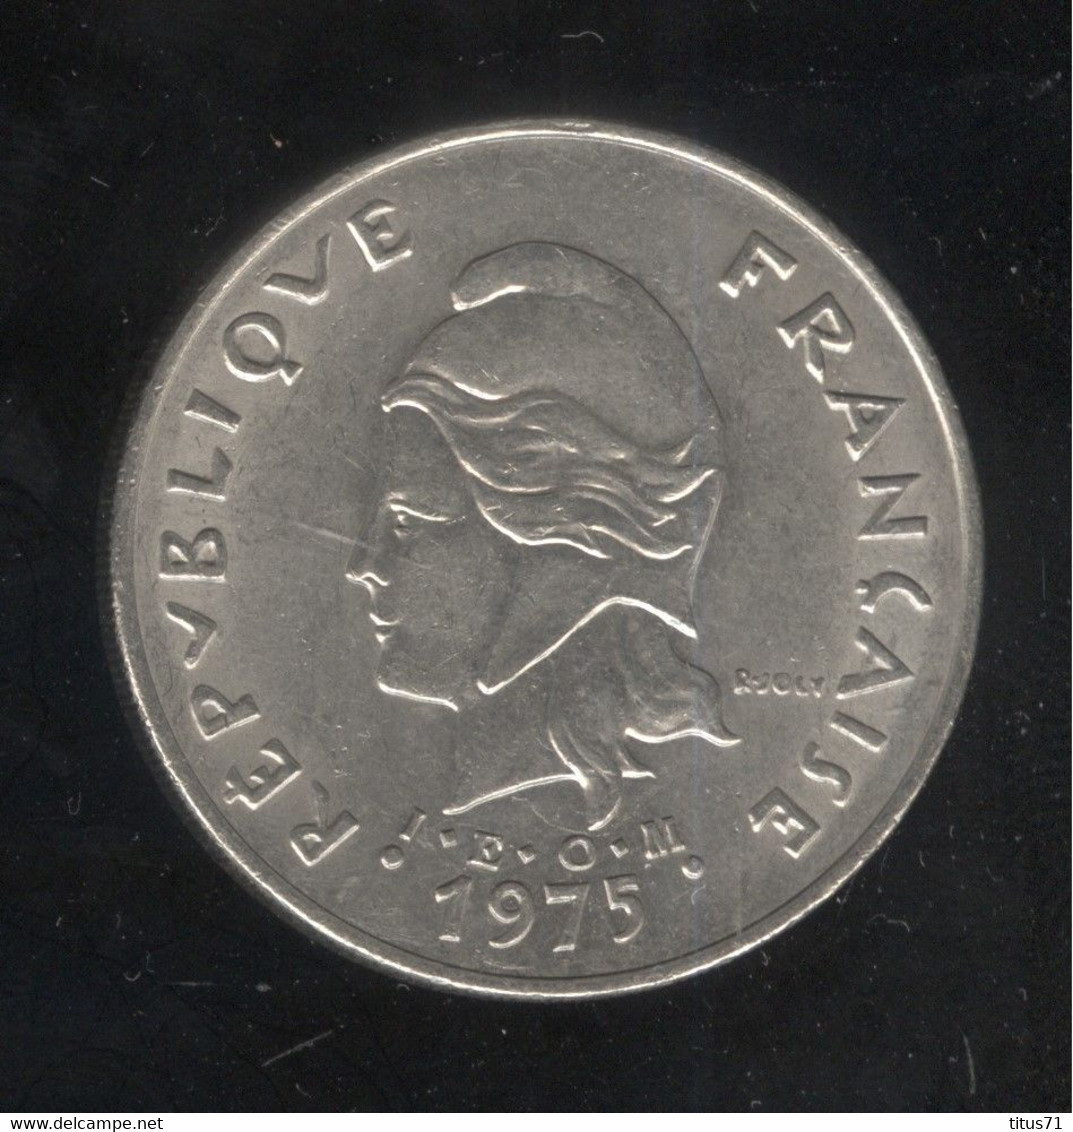 50 Francs Polynésie Française 1975 - French Polynesia